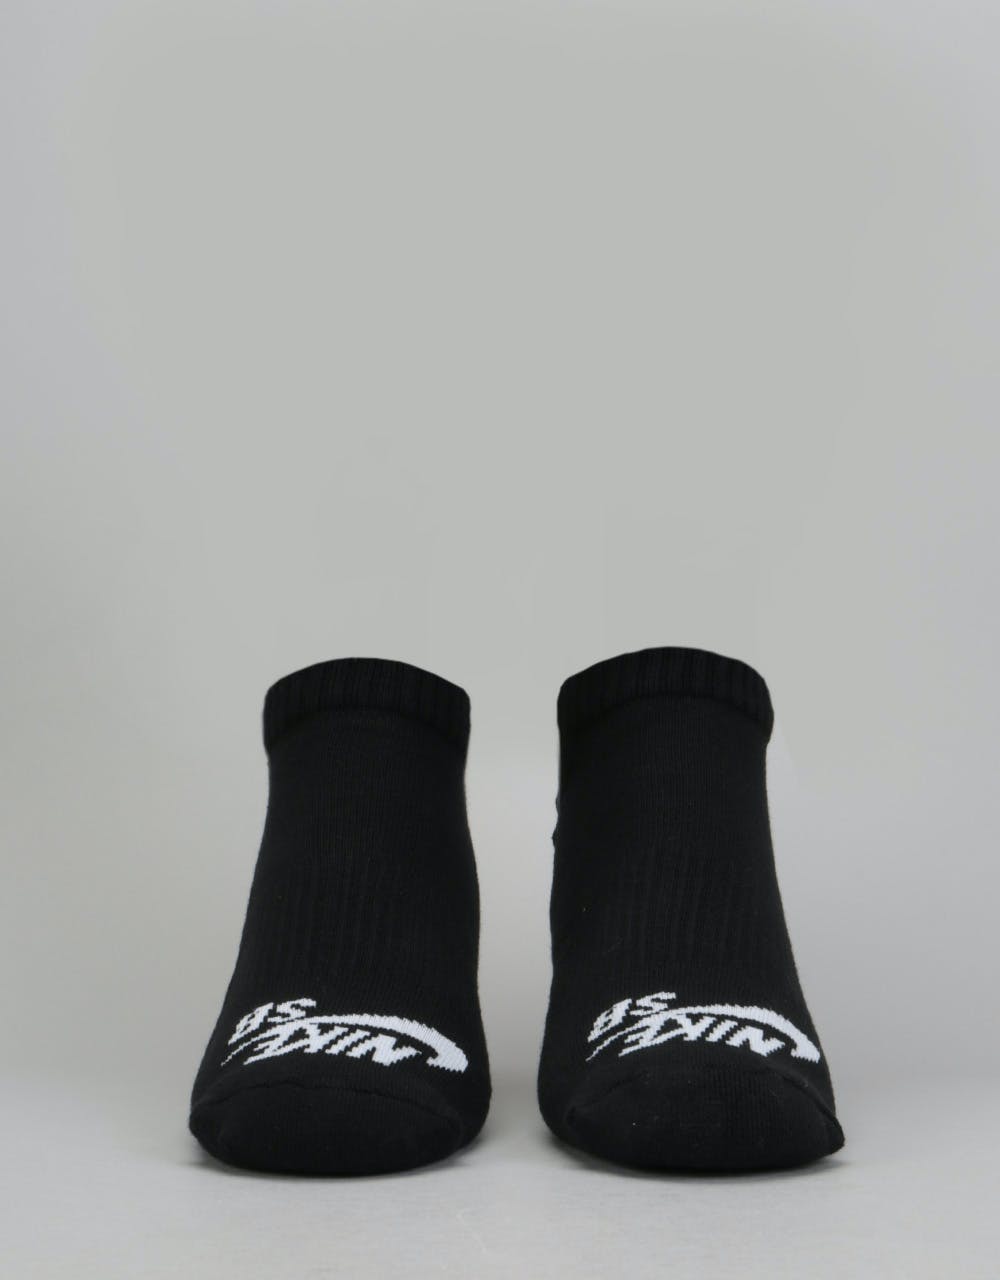 Nike SB No-Show Socks 3 Pack - Black/White